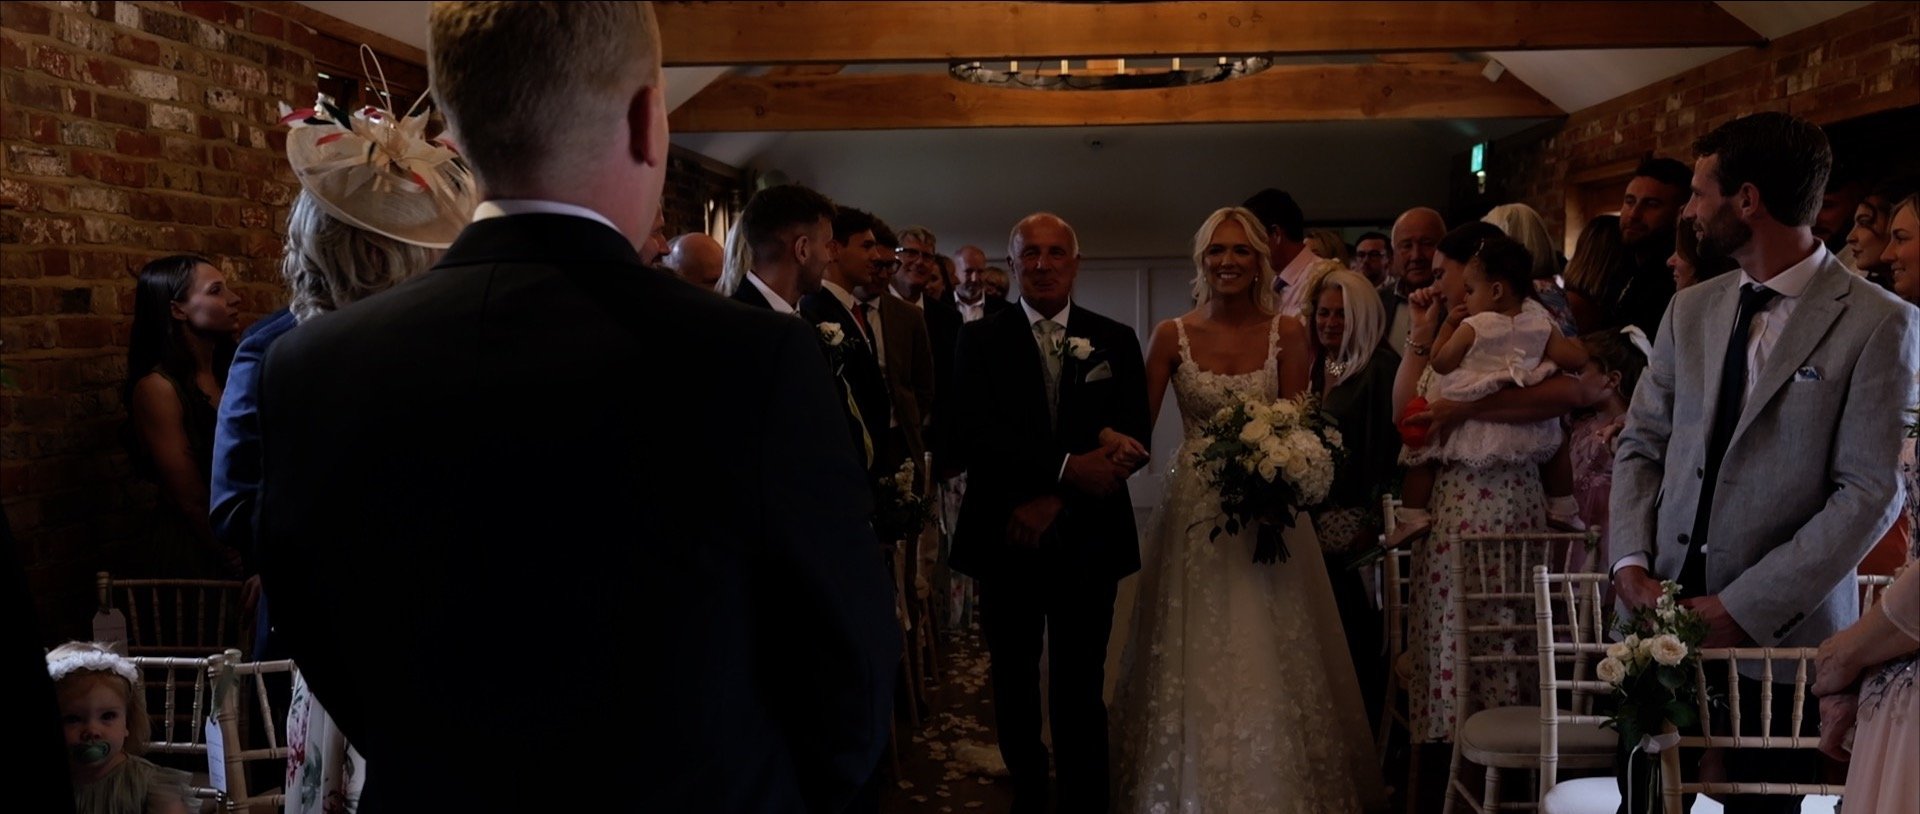 3 Cheers Media - Apton Hall Wedding Video - Bride walking down aisle.jpg